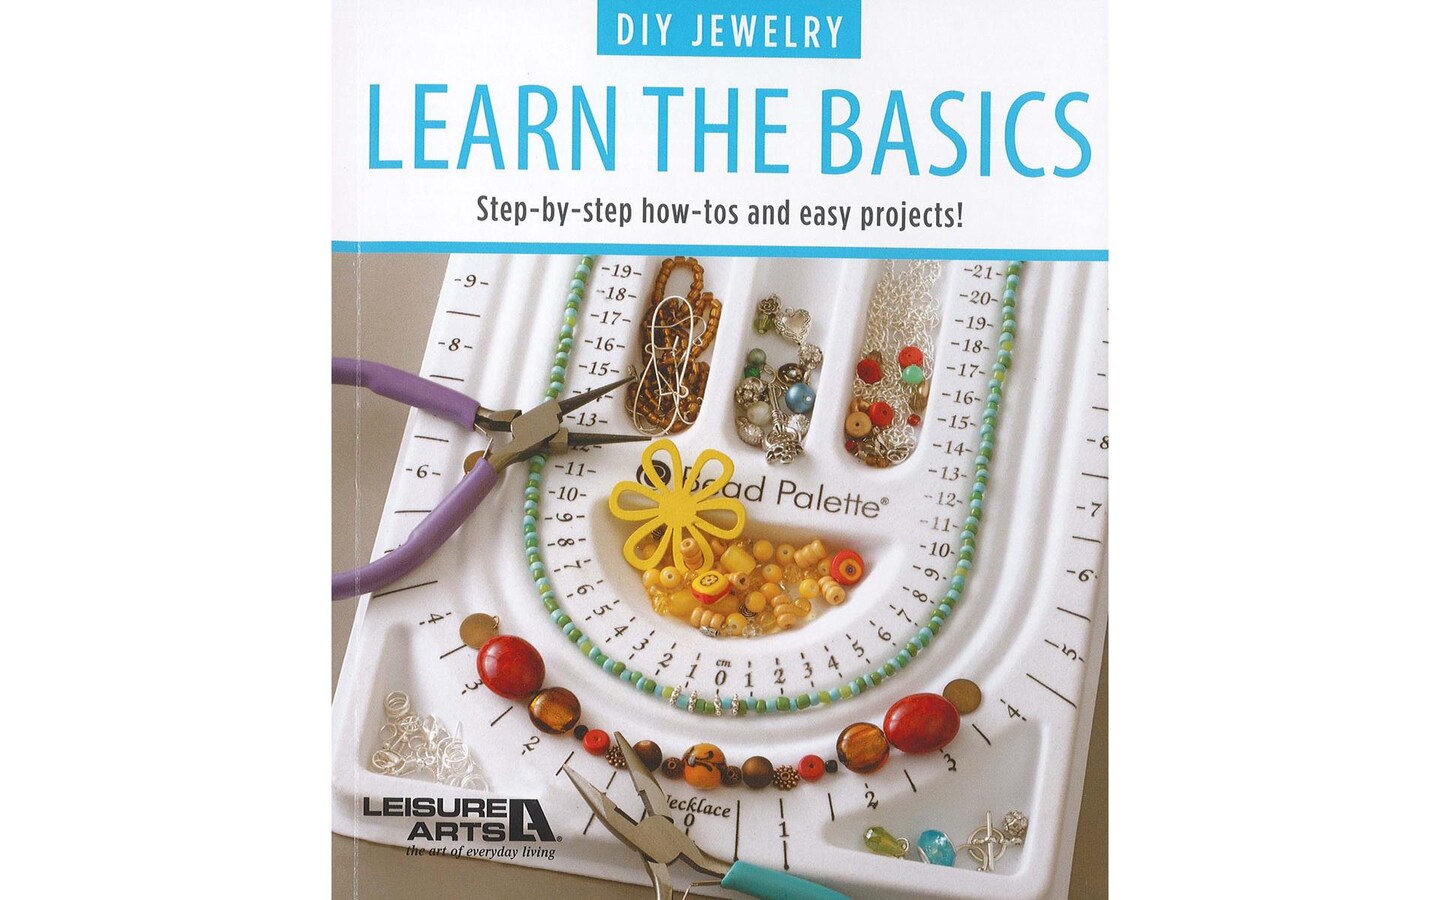 Leisure Arts DIY Jewelry Learn The Basics Jewelry Book